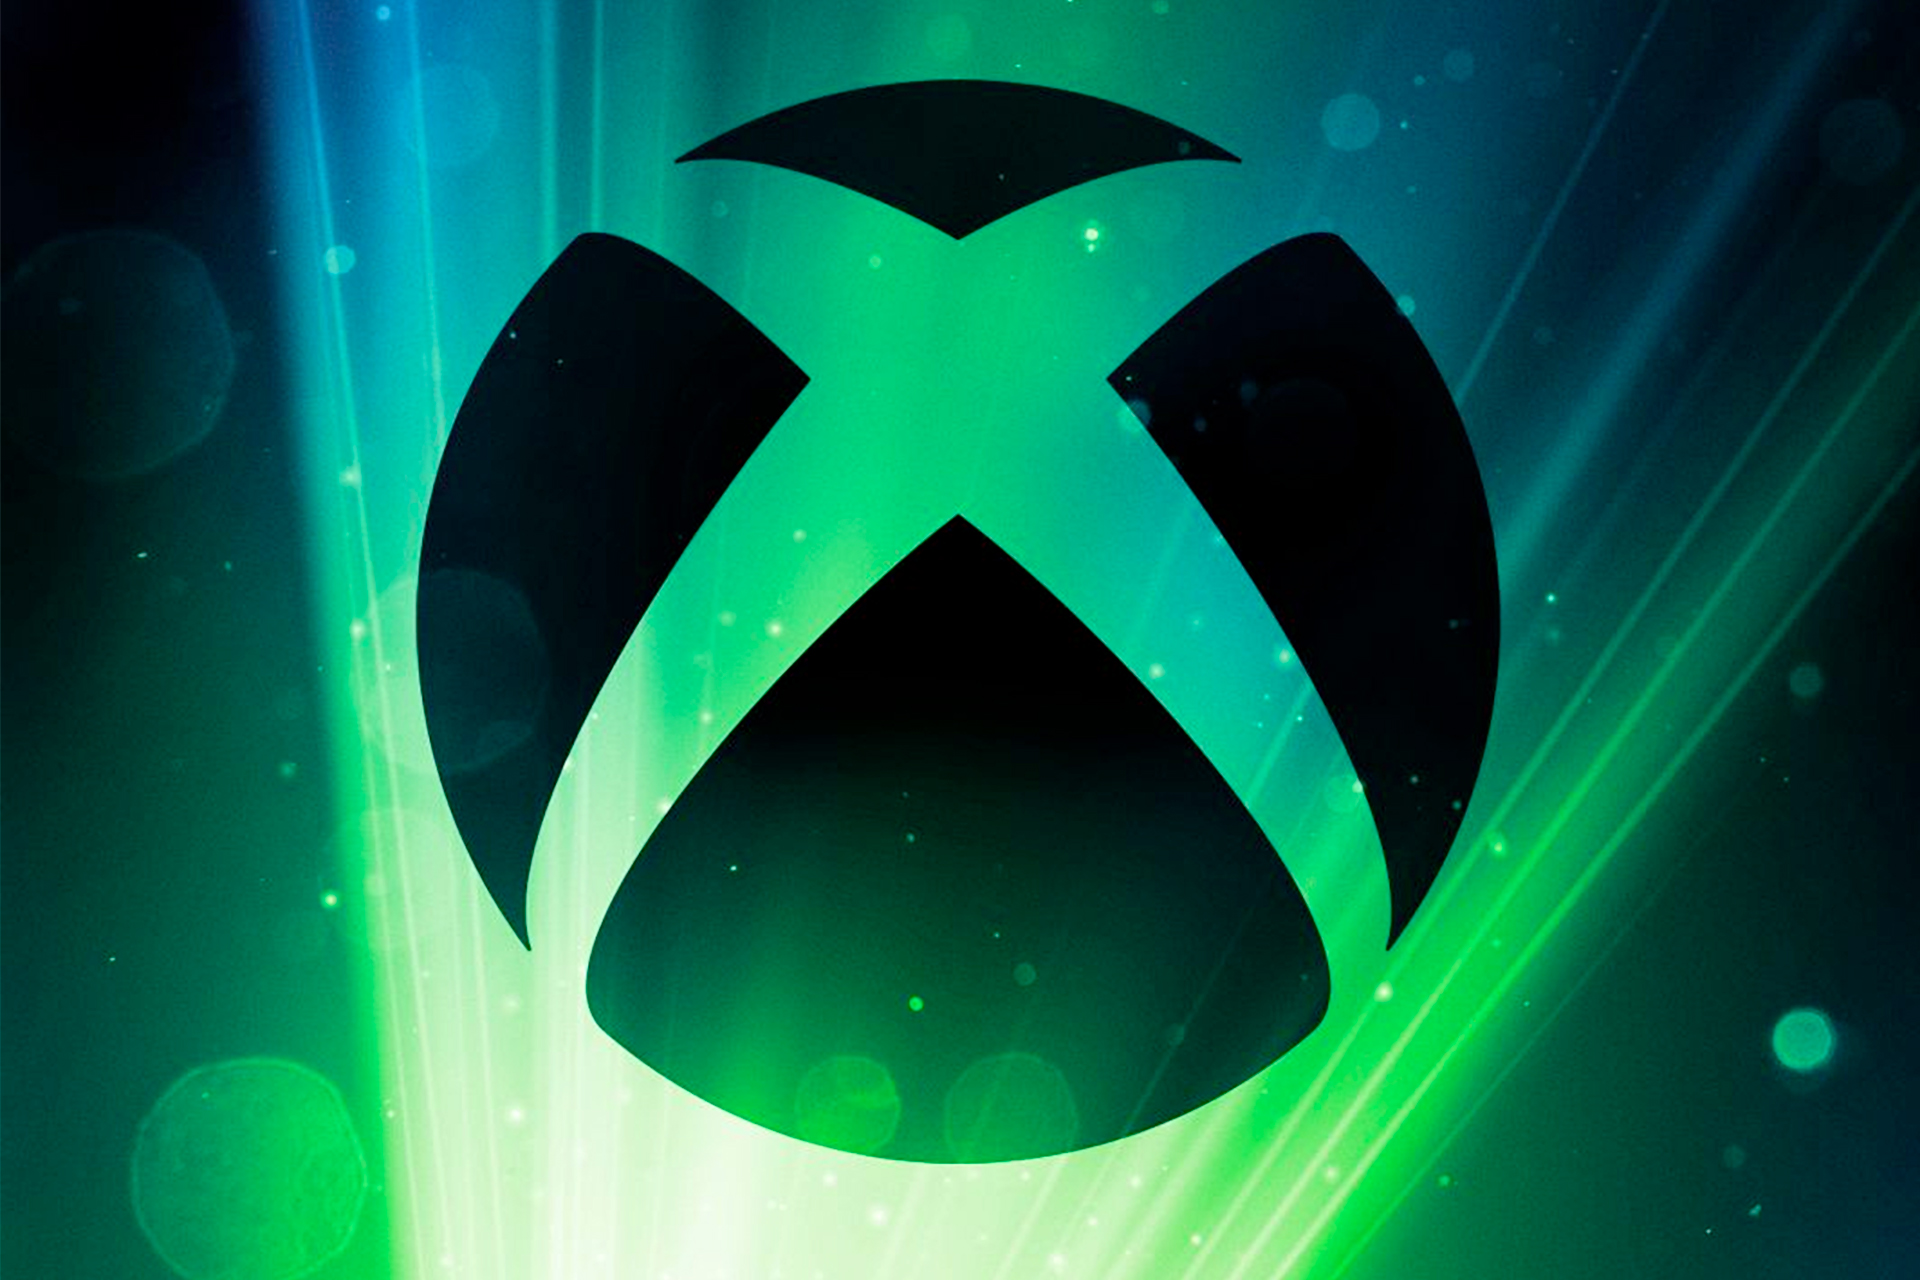 The Xbox logo silhouetting a spotlight background